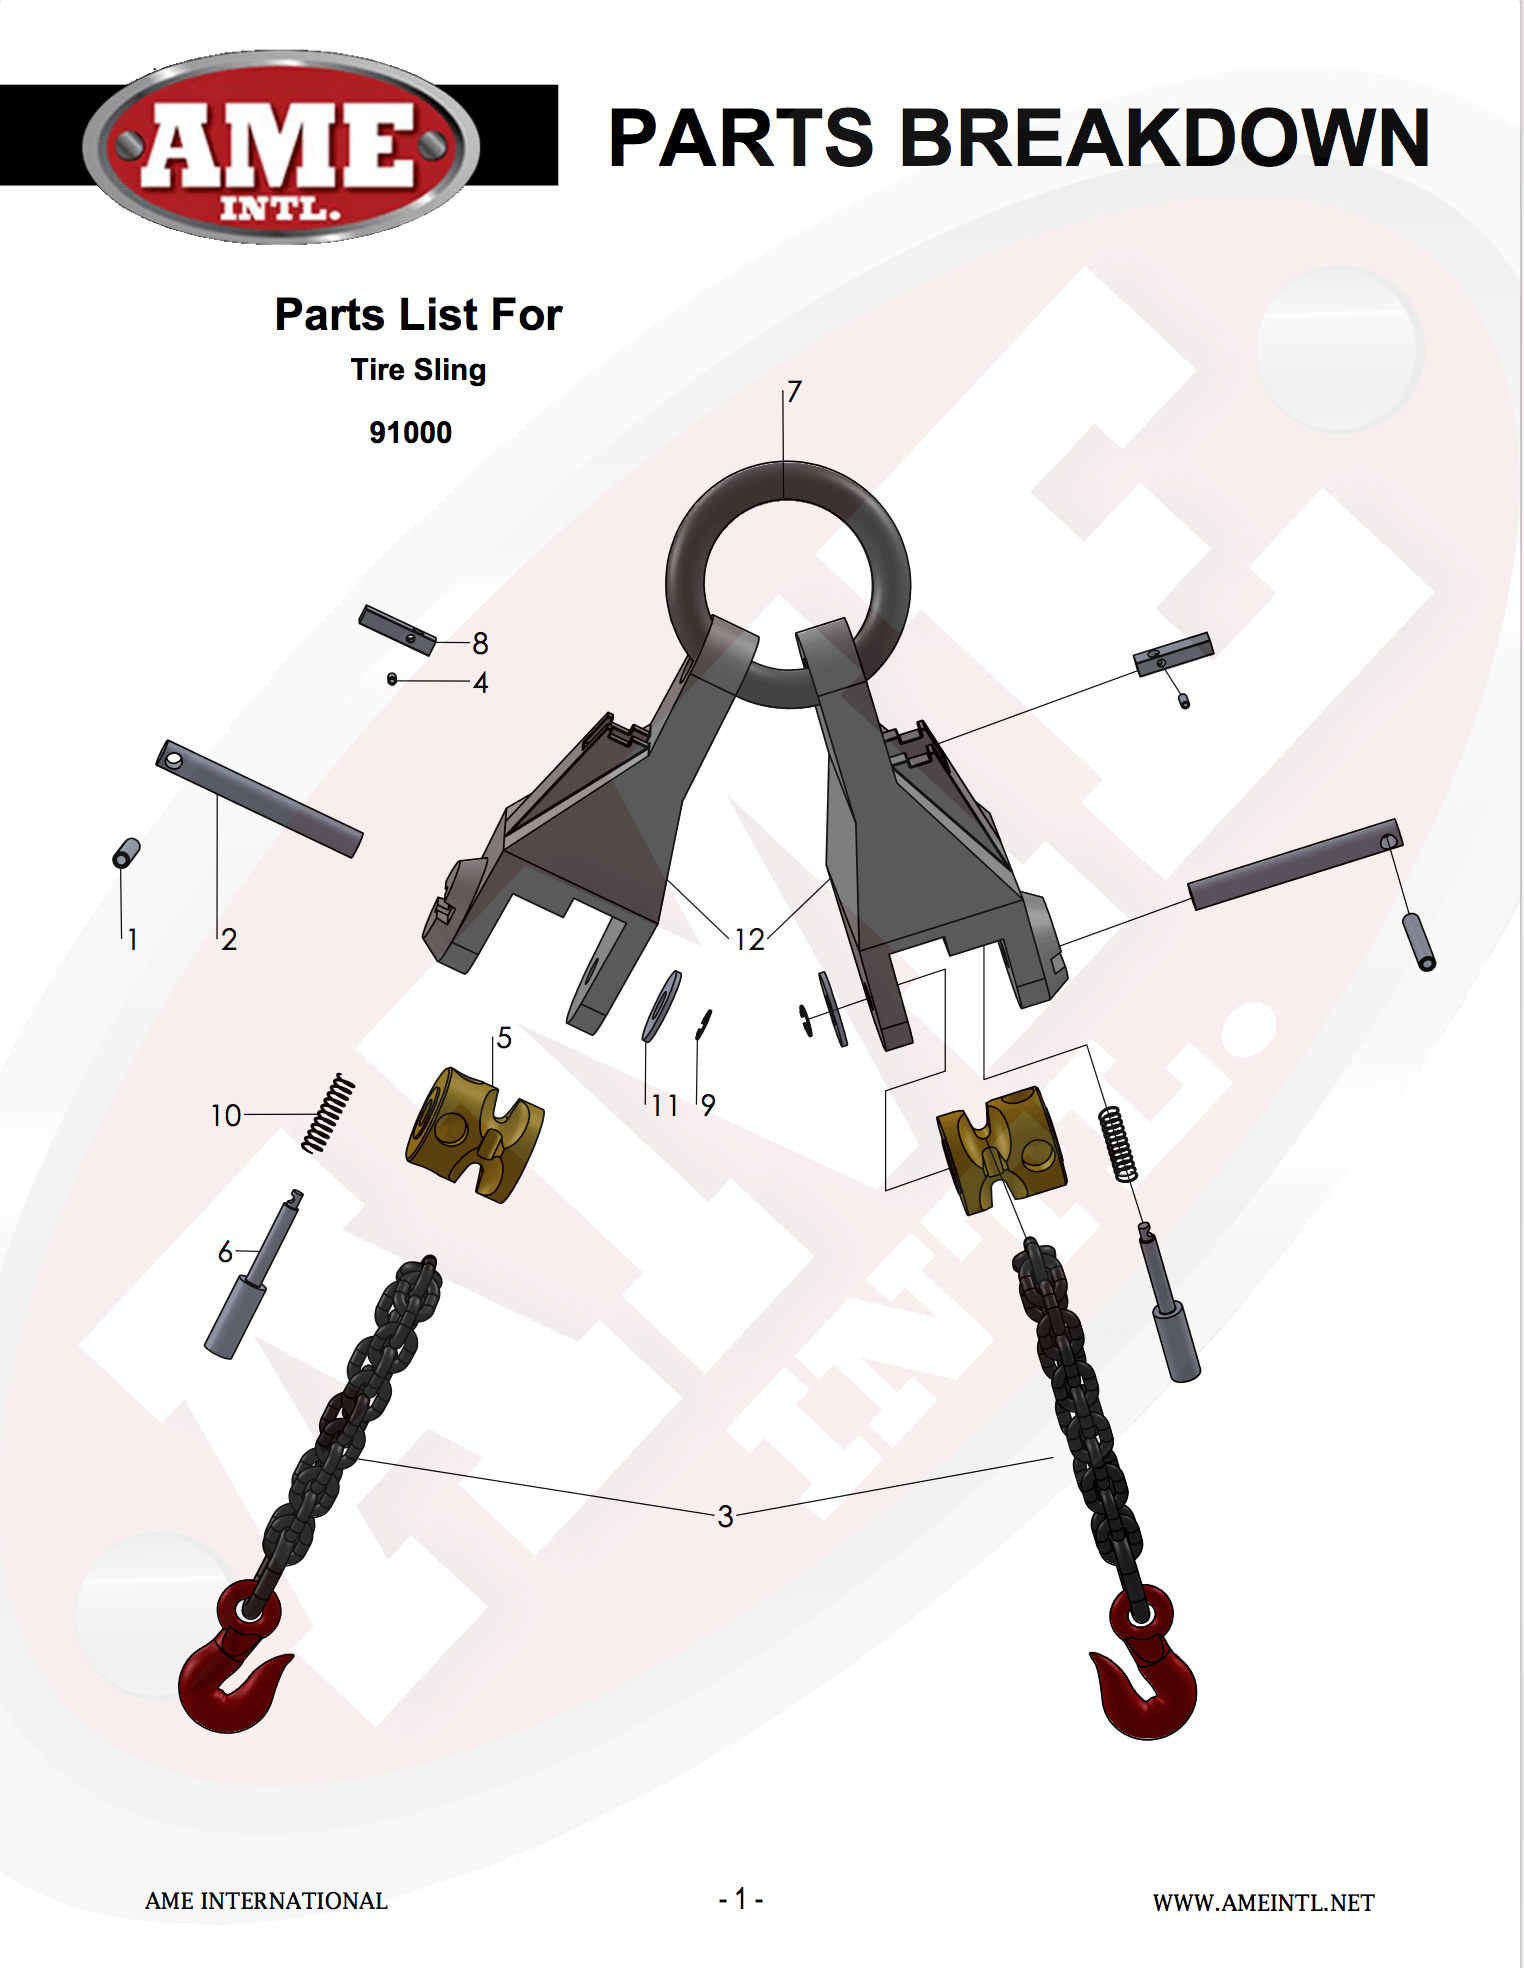 91000-parts-breakdown-thumbnail.png